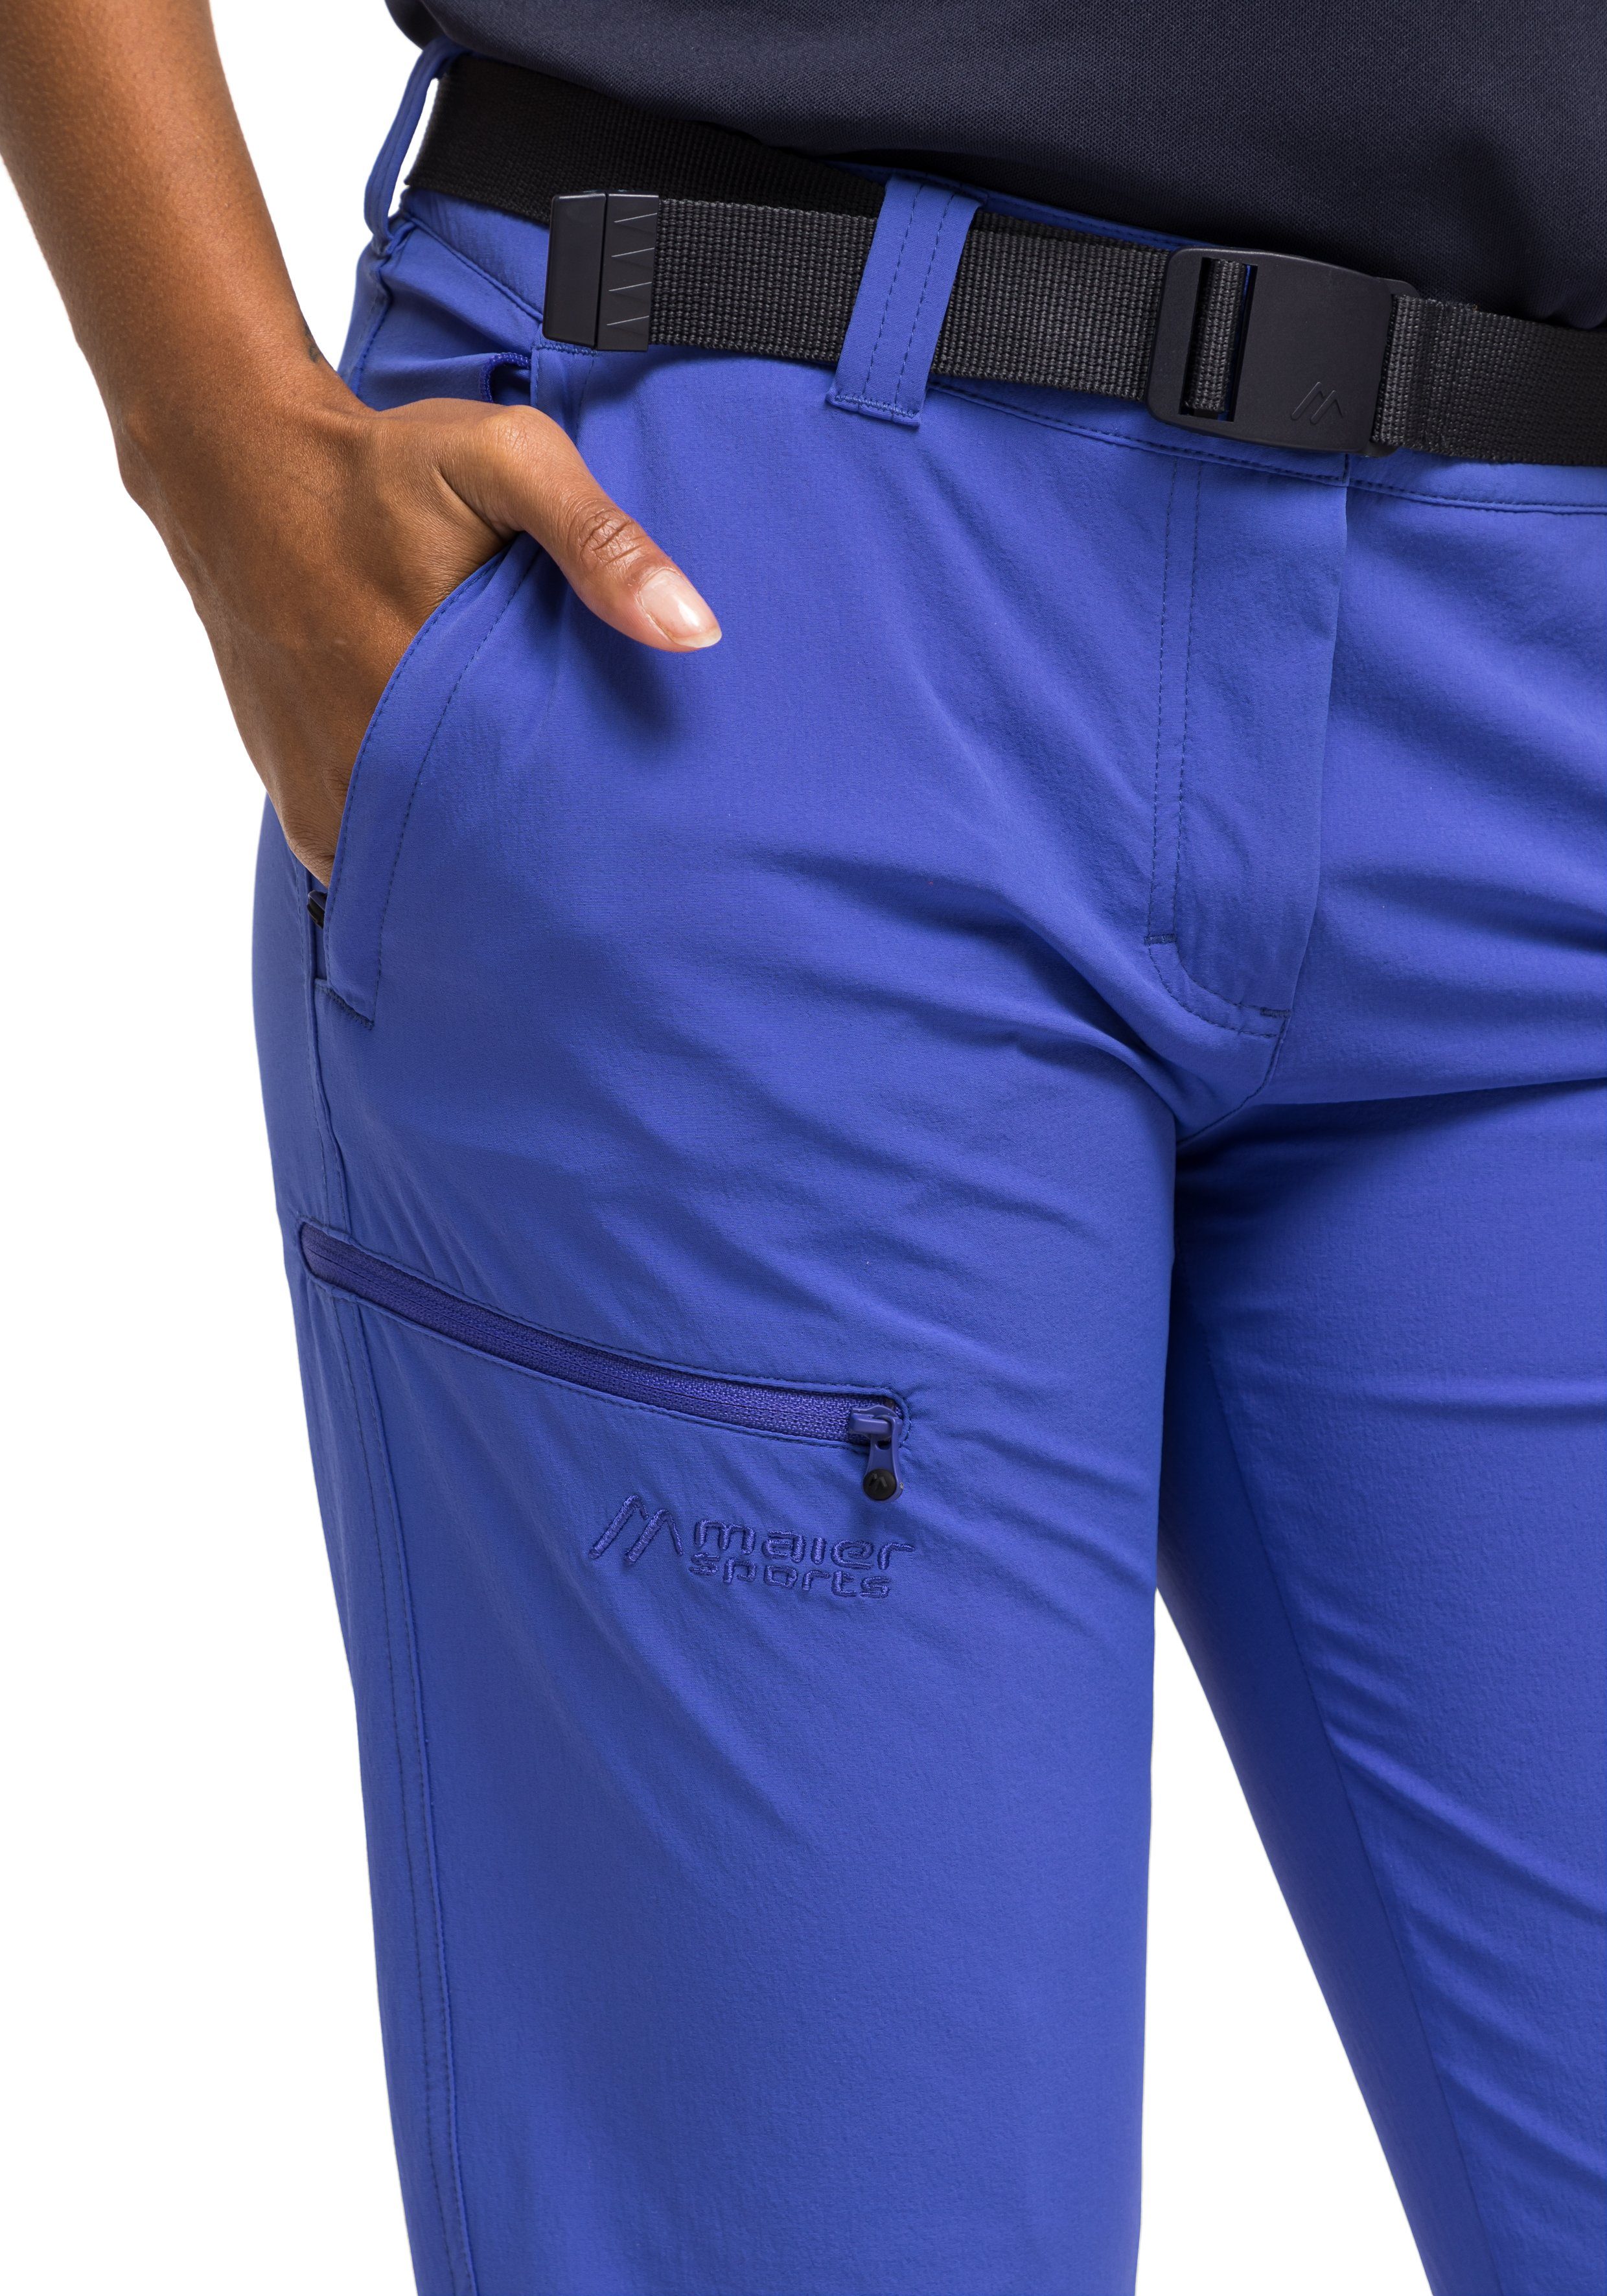 elastischem Outdoor-Hose aus Maier Funktionshose darkblue slim Material Wanderhose, Sports Damen Inara